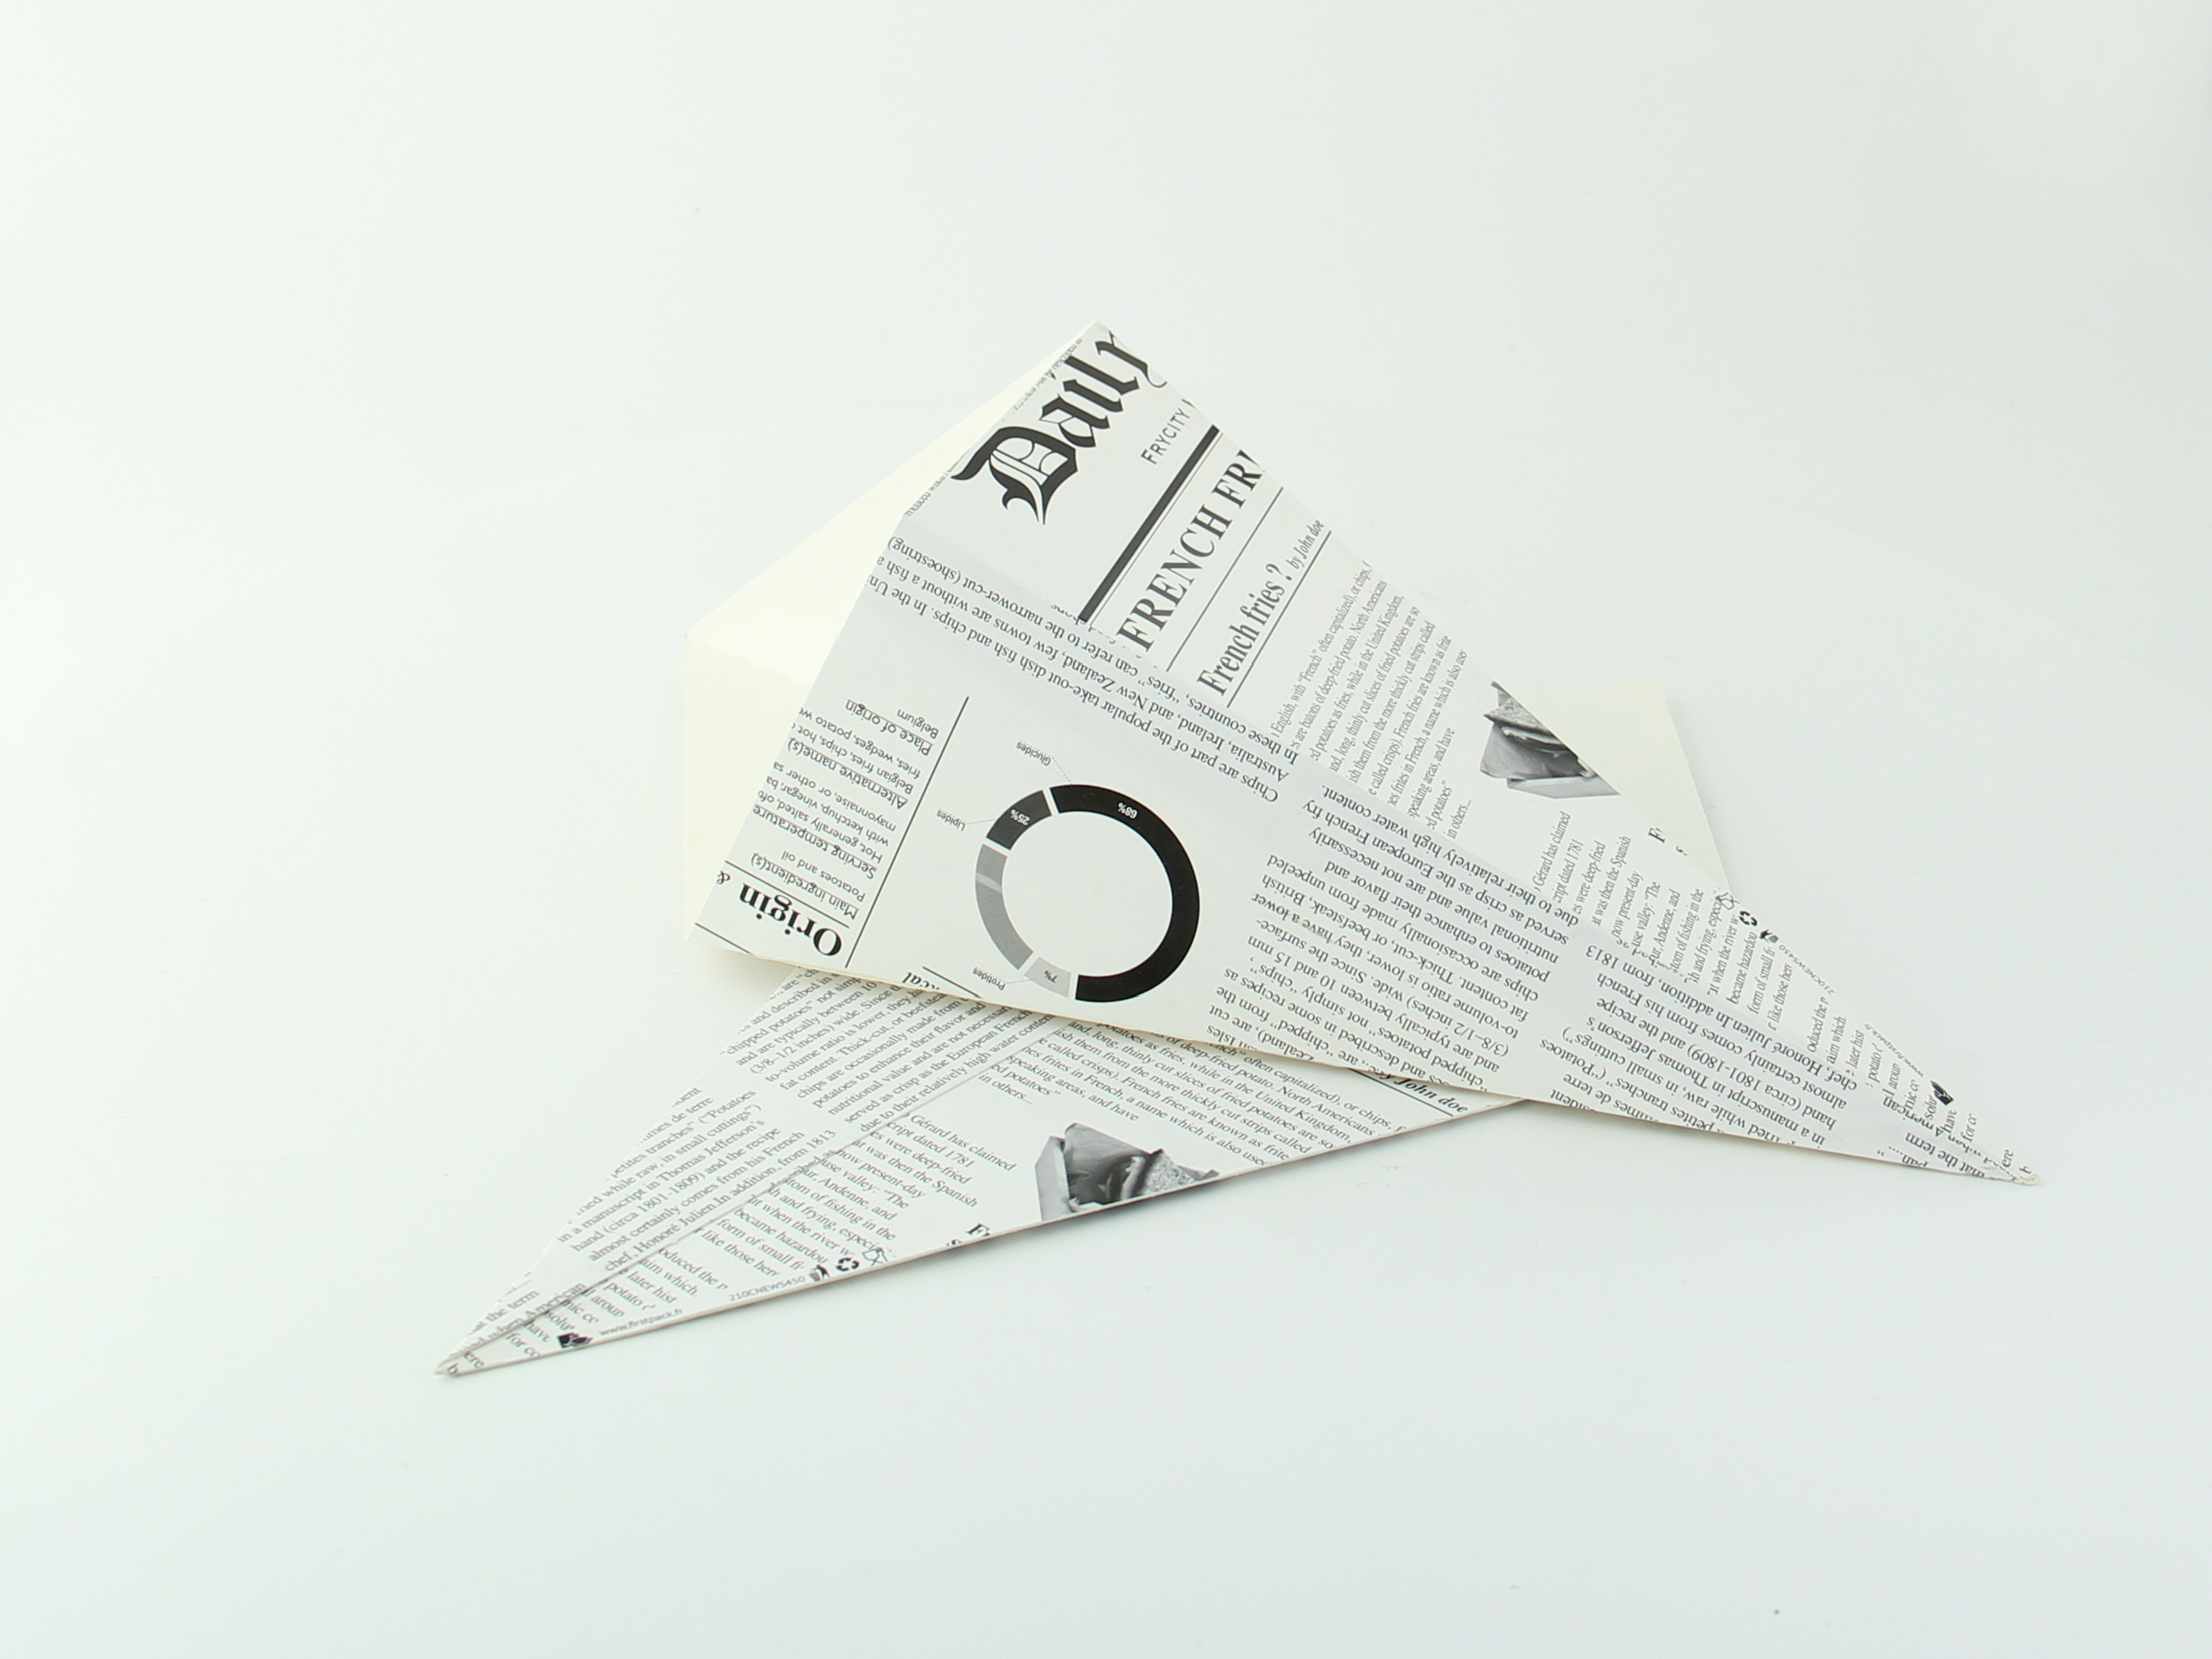 Sturdy Paper Cones with Newspaper Print 14.5oz 7.7 x 6.3in - 125 pcs